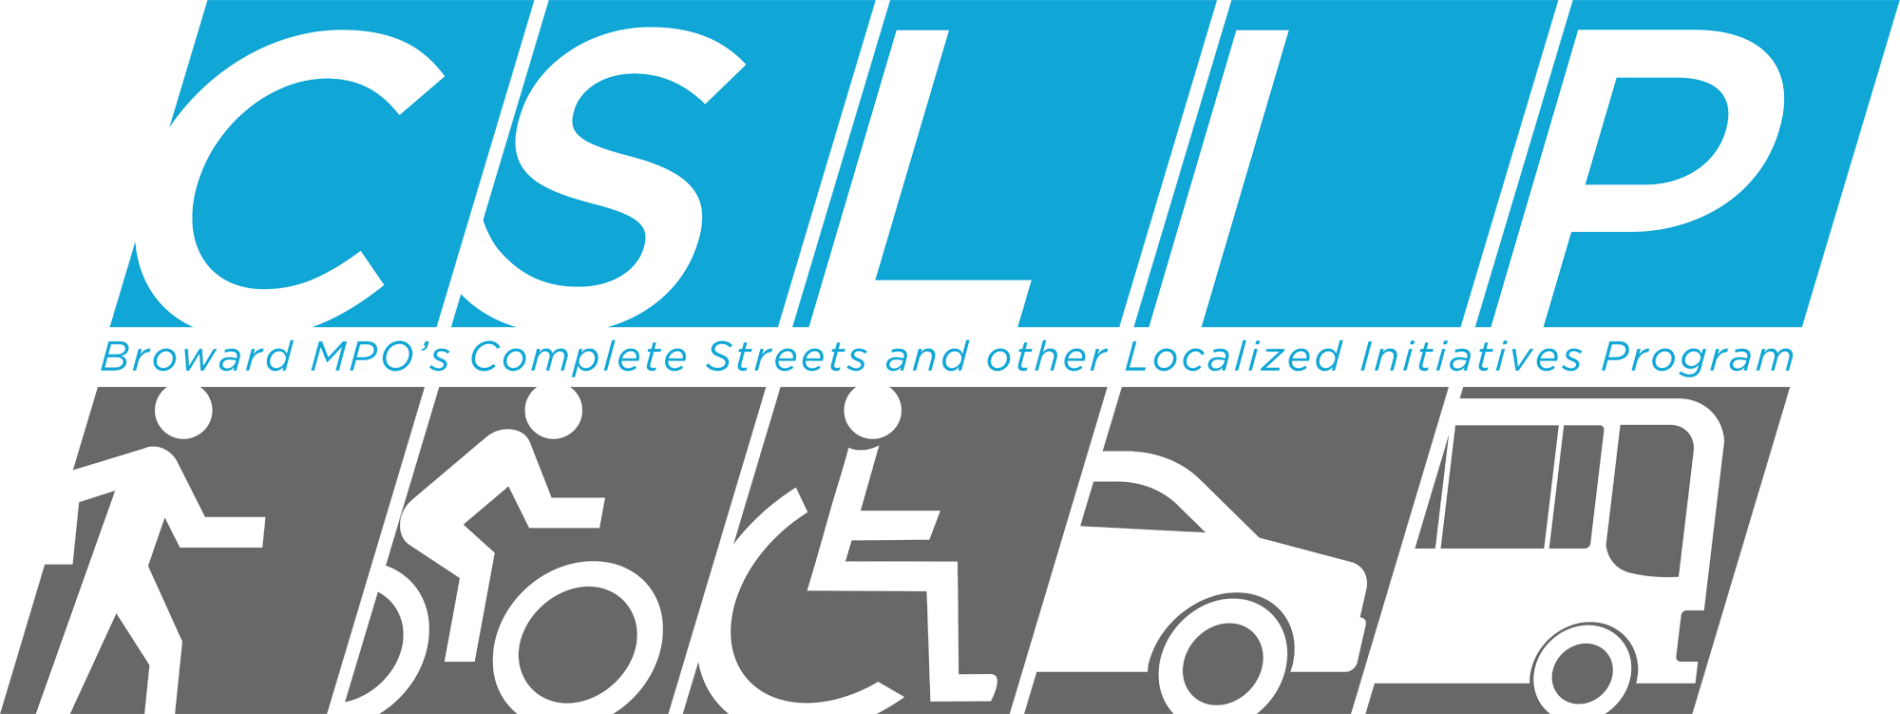 CSLIP Logo Web